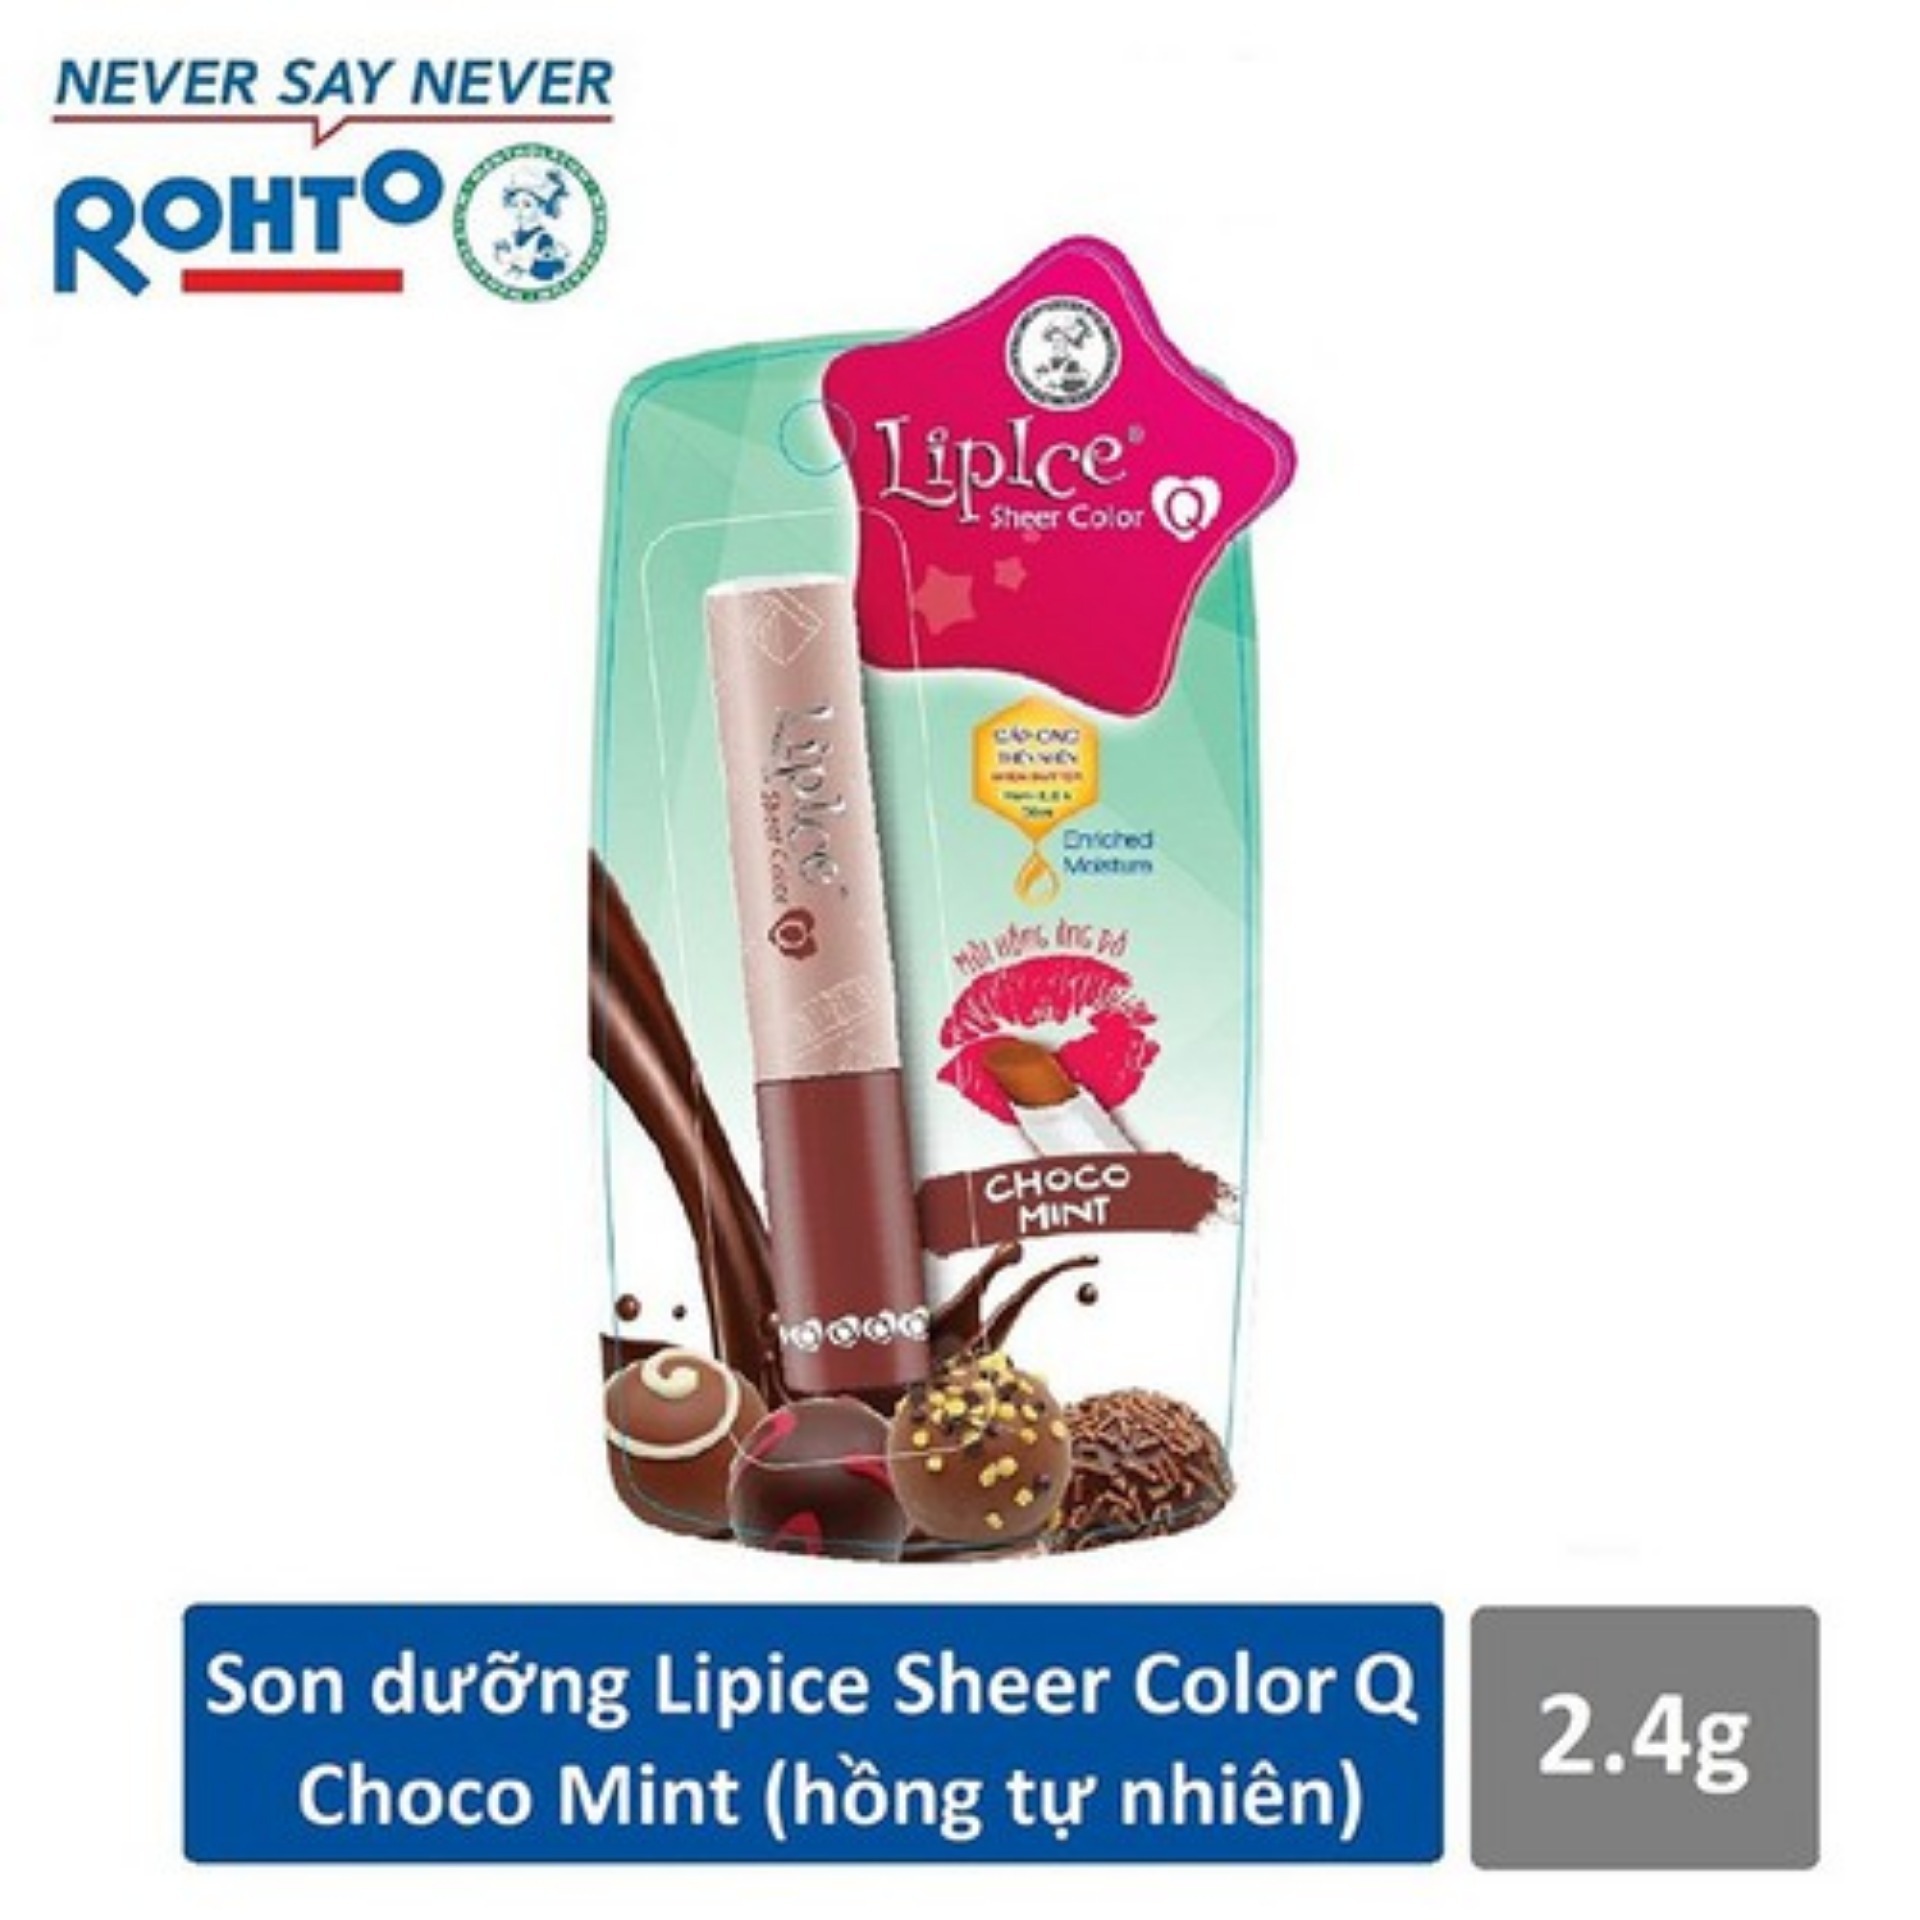 Son dưỡng Lipice Sheer Color Q Choco Mint 2g